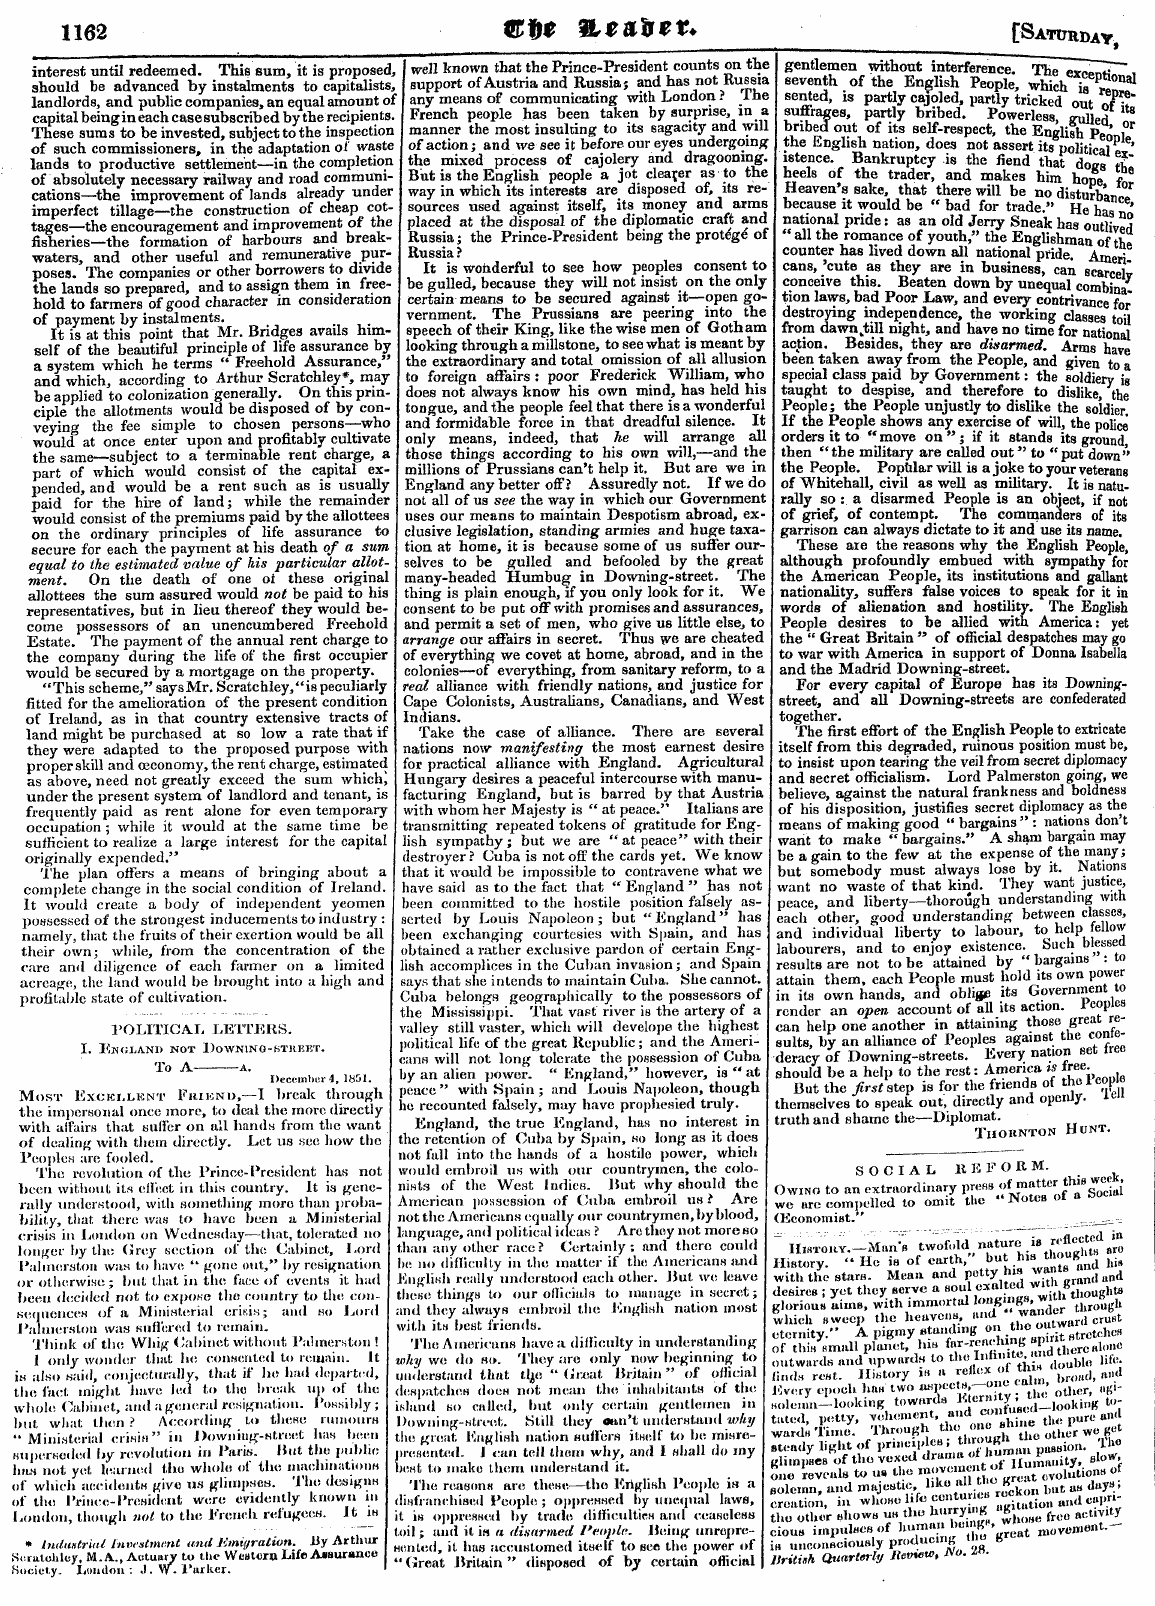 Leader (1850-1860): jS F Y, Country edition - 1162 Fffte G,Ia&Gg» ^ [Saturday ,